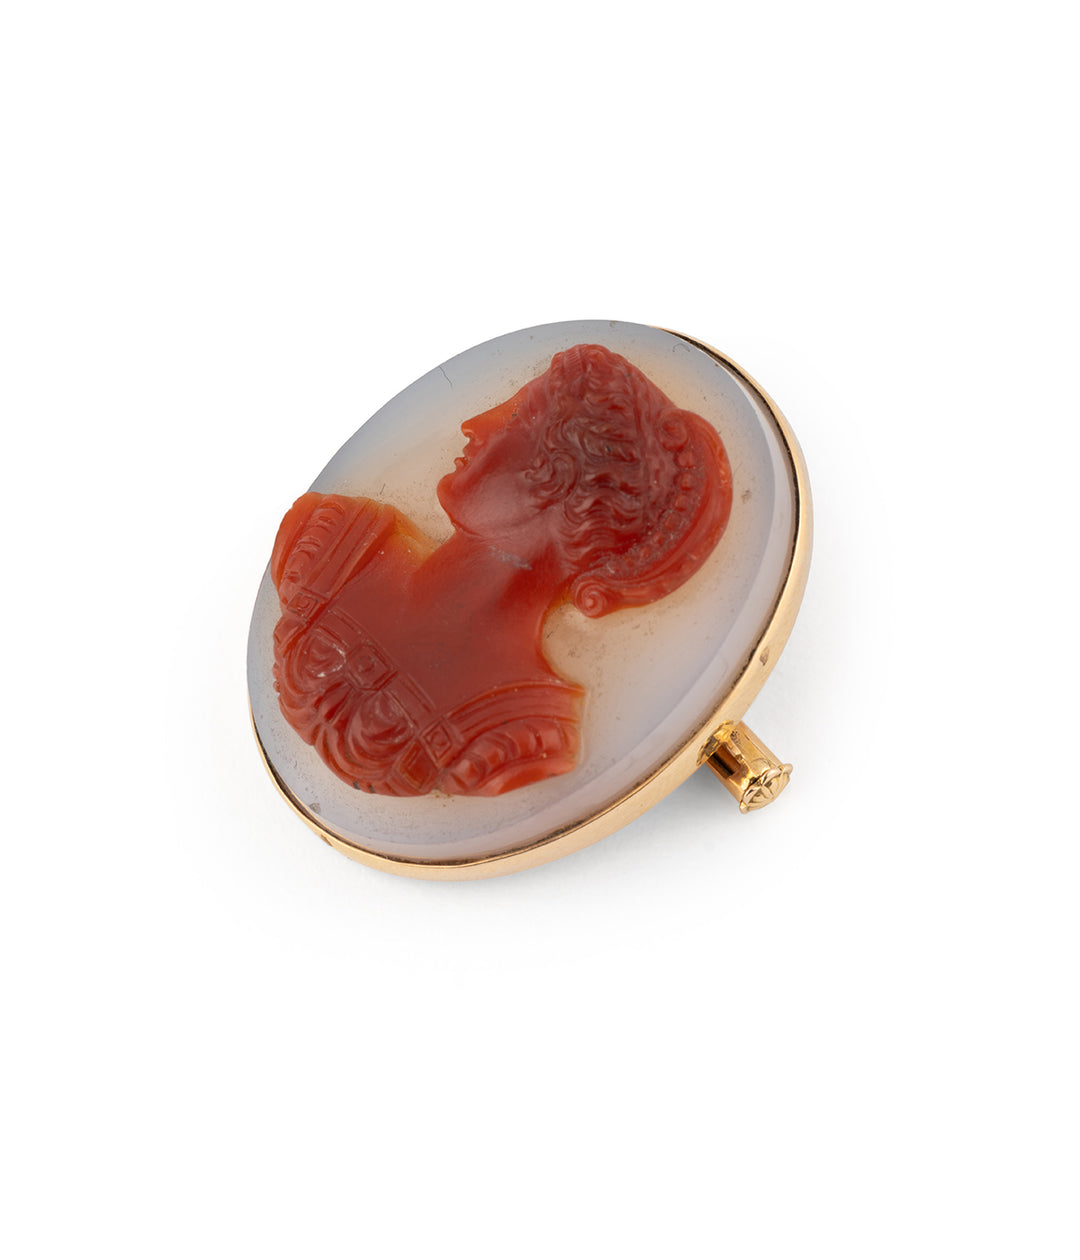 Antique agate cameo brooch woman profile 18k gold antique jewelry "Orella" - Caillou Paris